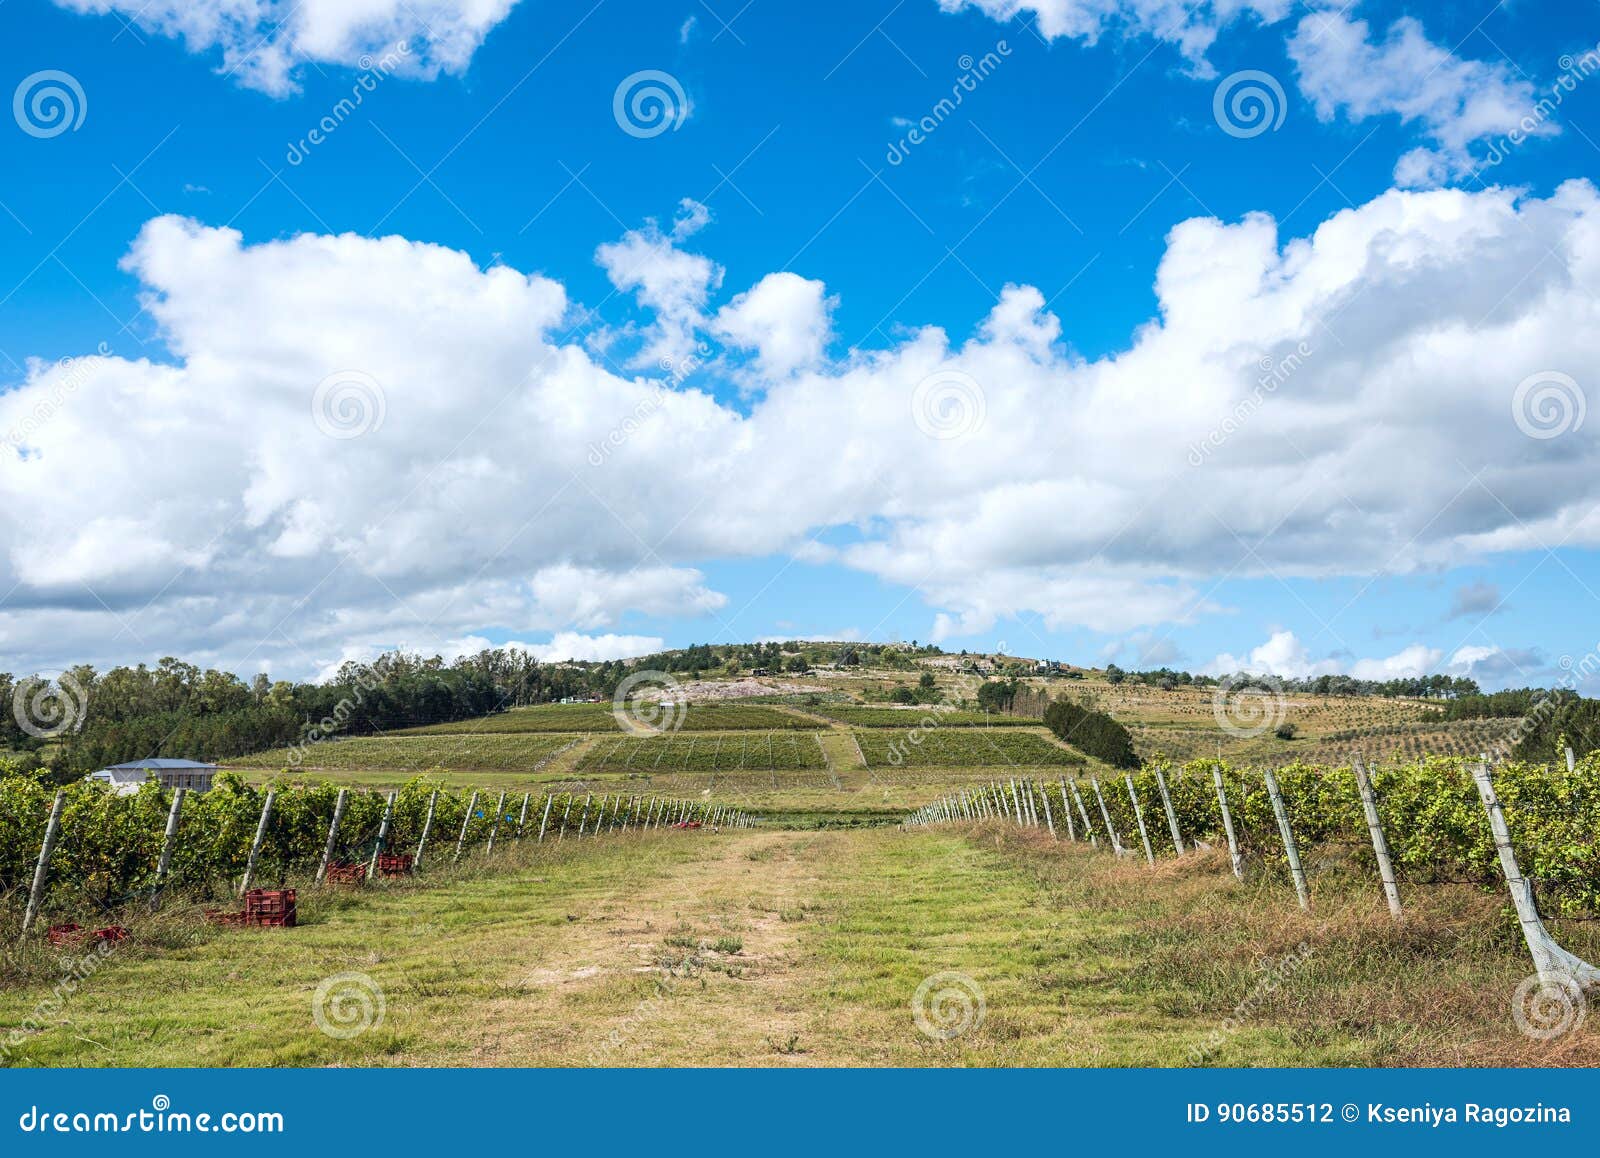 vineyard located near punta del este, part of the wine road of uruguay